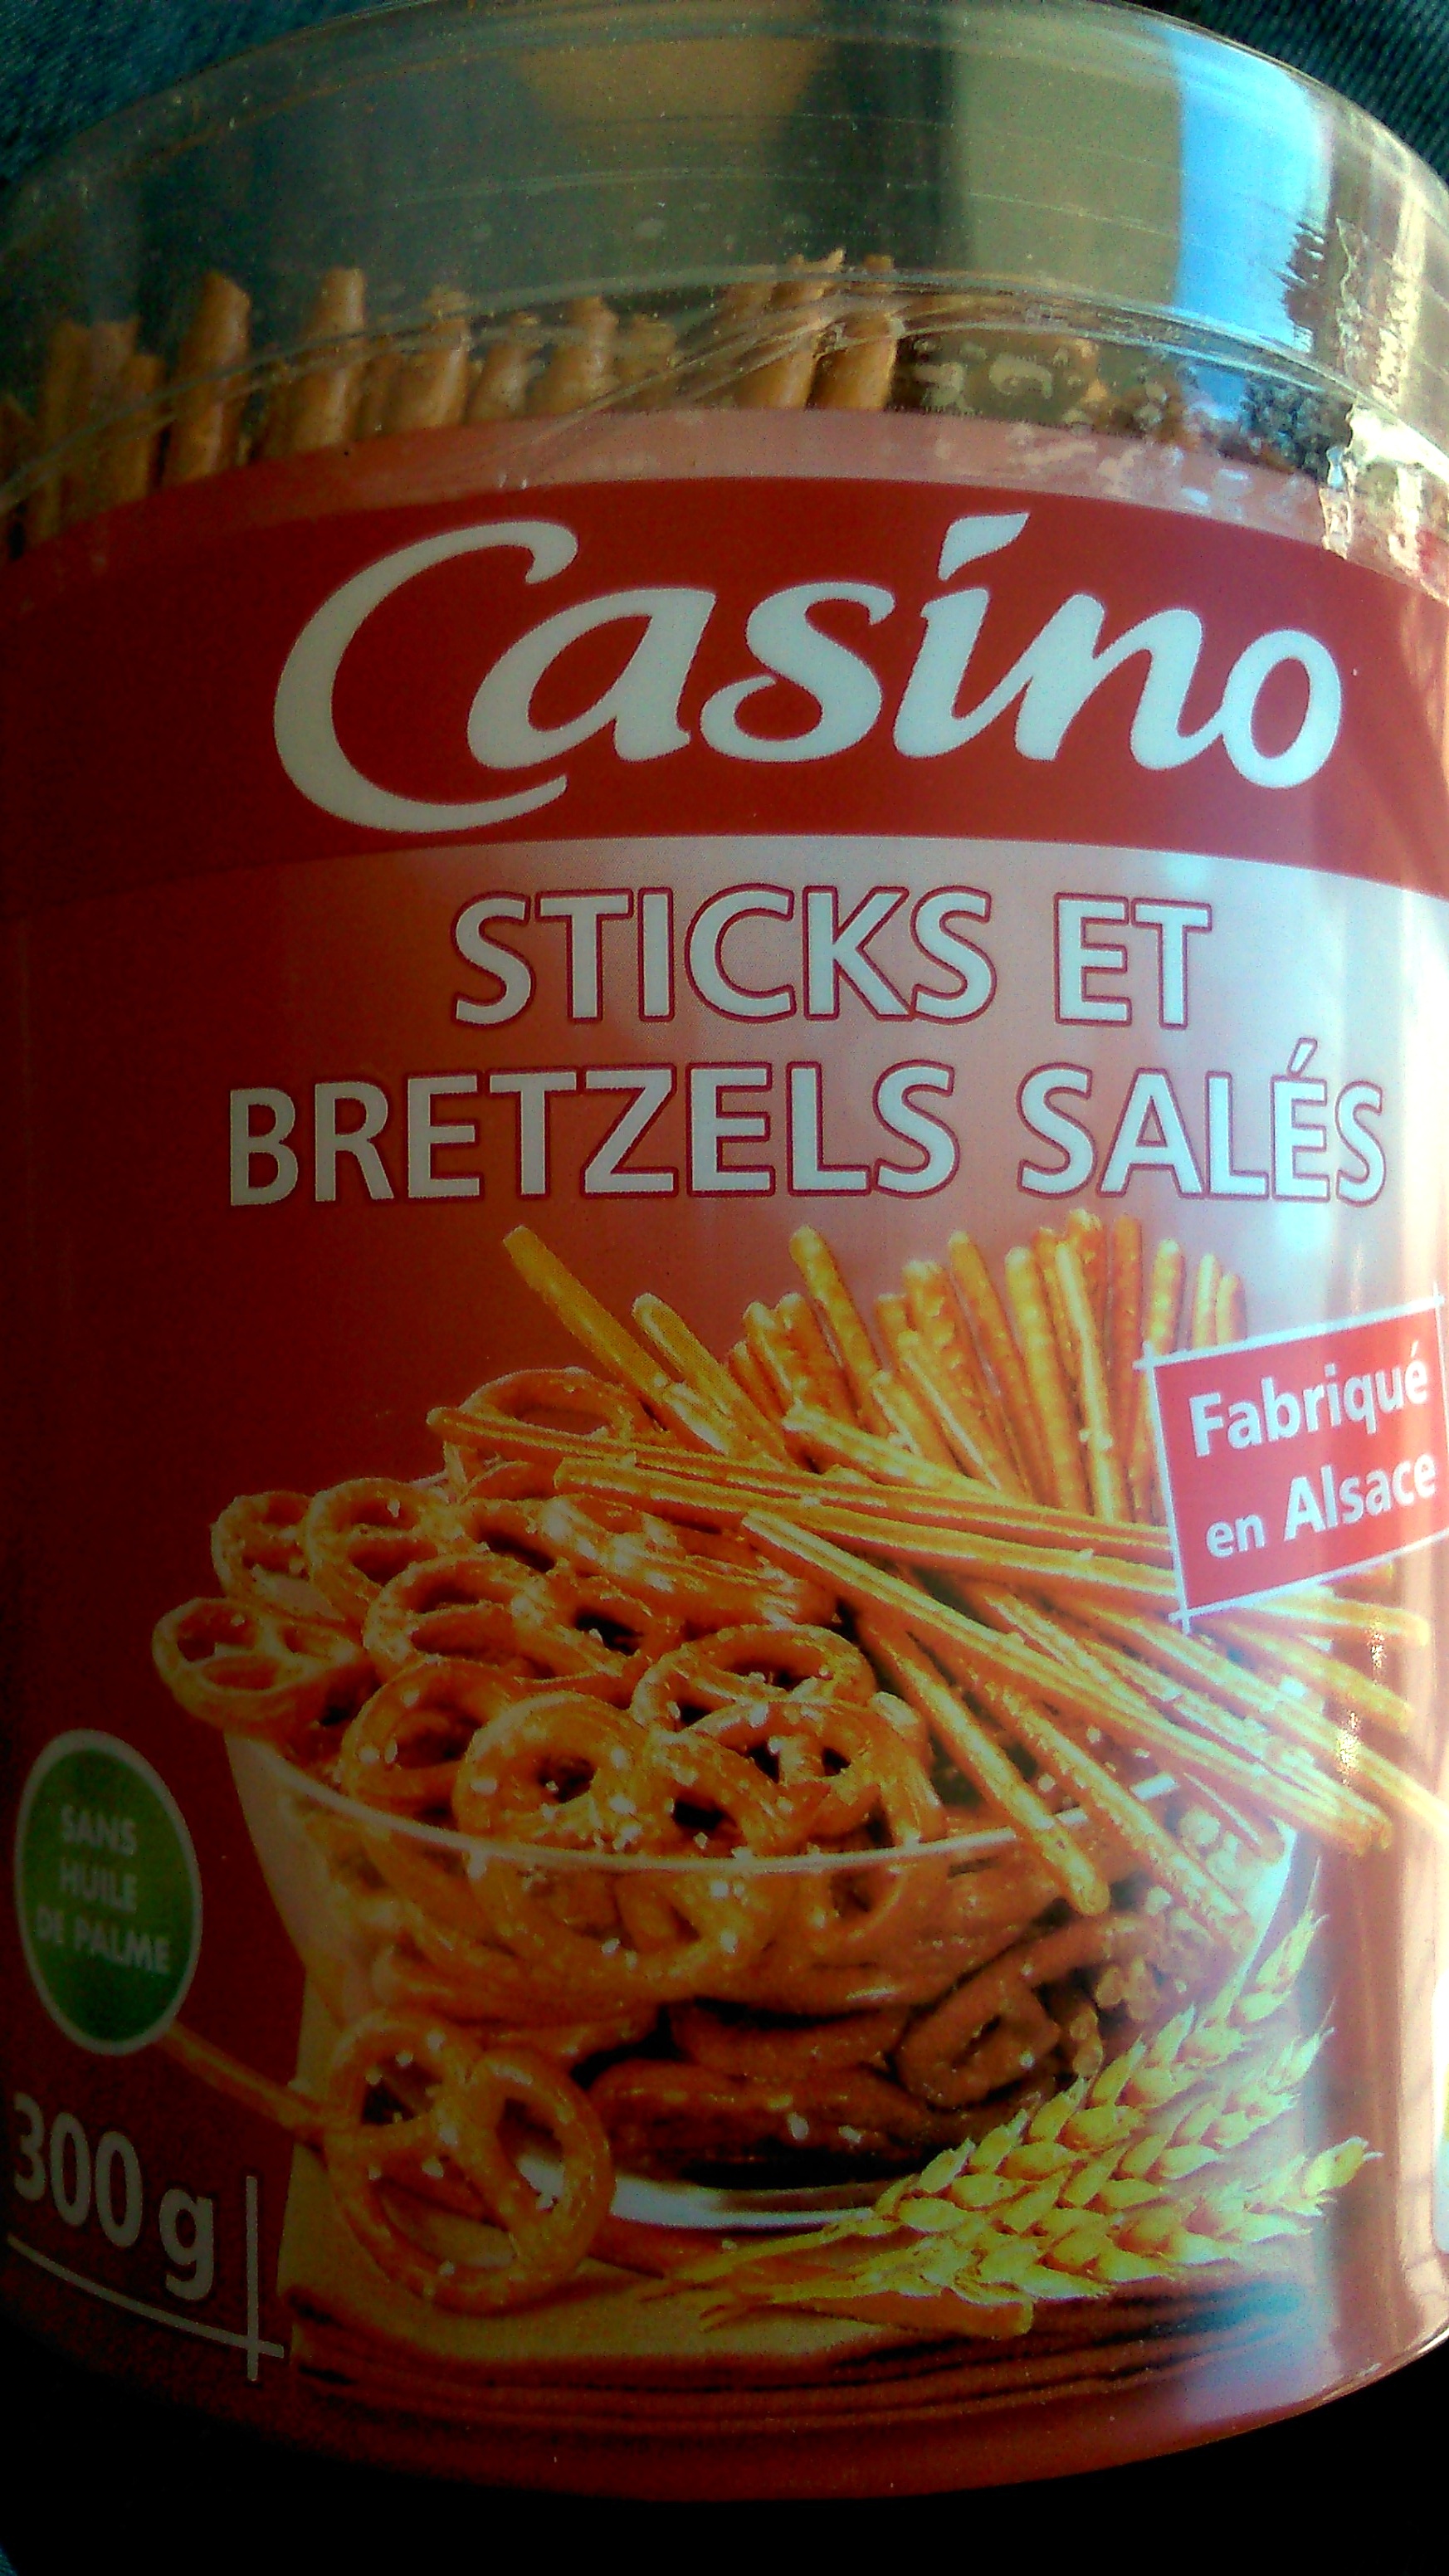 Sticks et bretzels salés - Product - fr